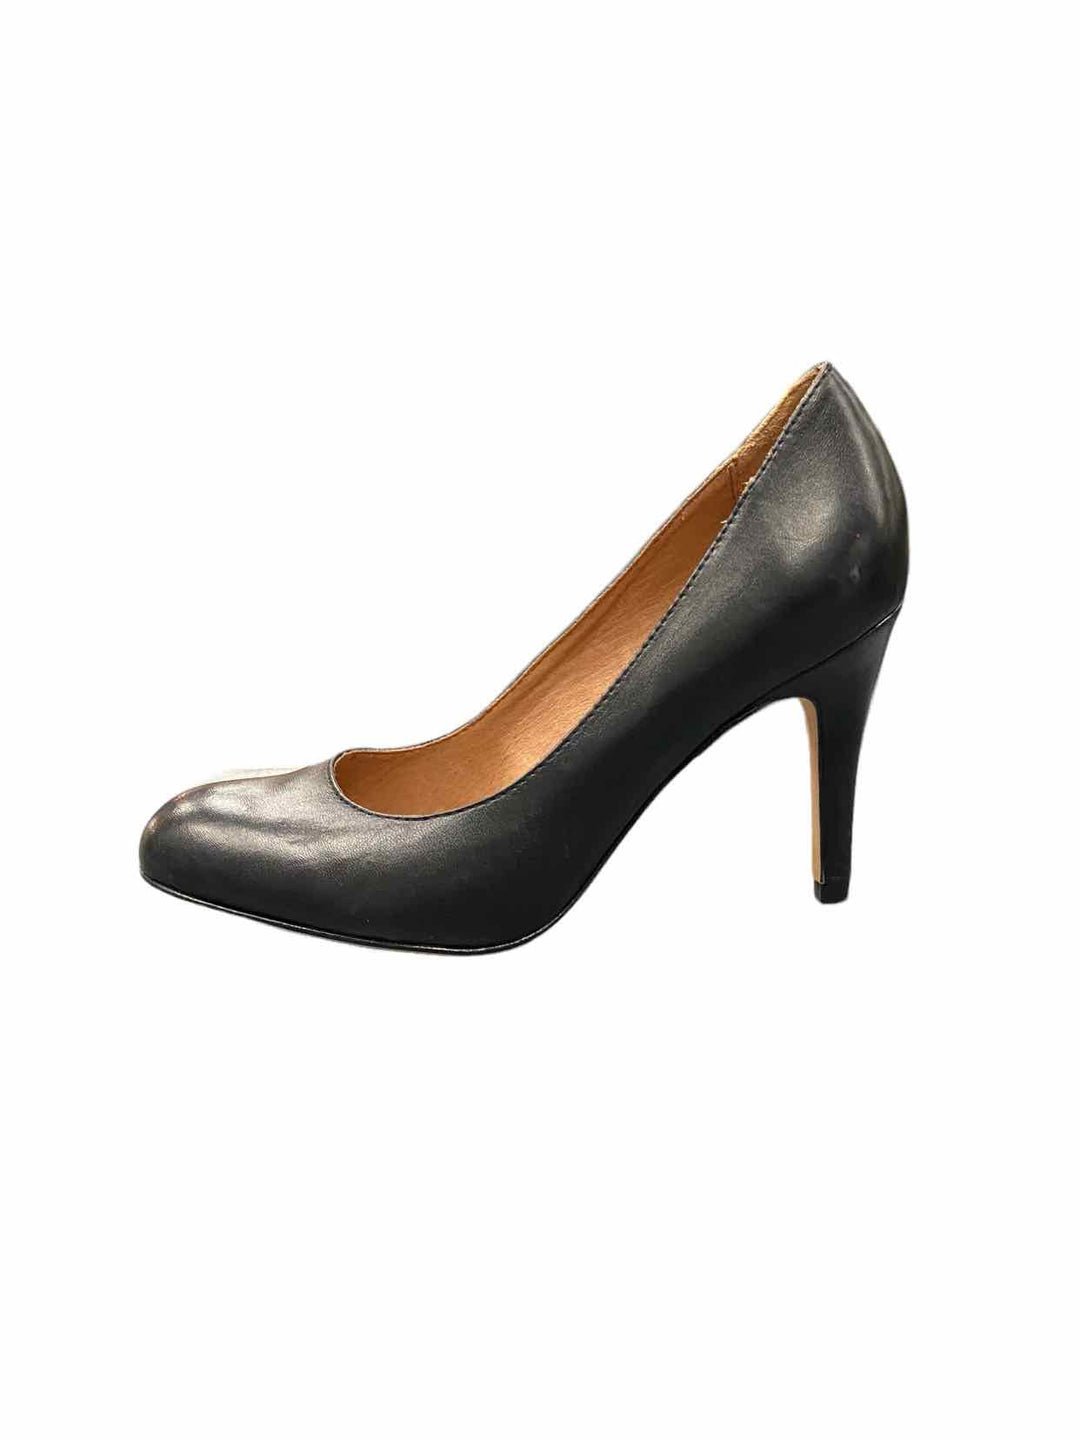 Corso Como Shoe Size 7 Black Leather Heels